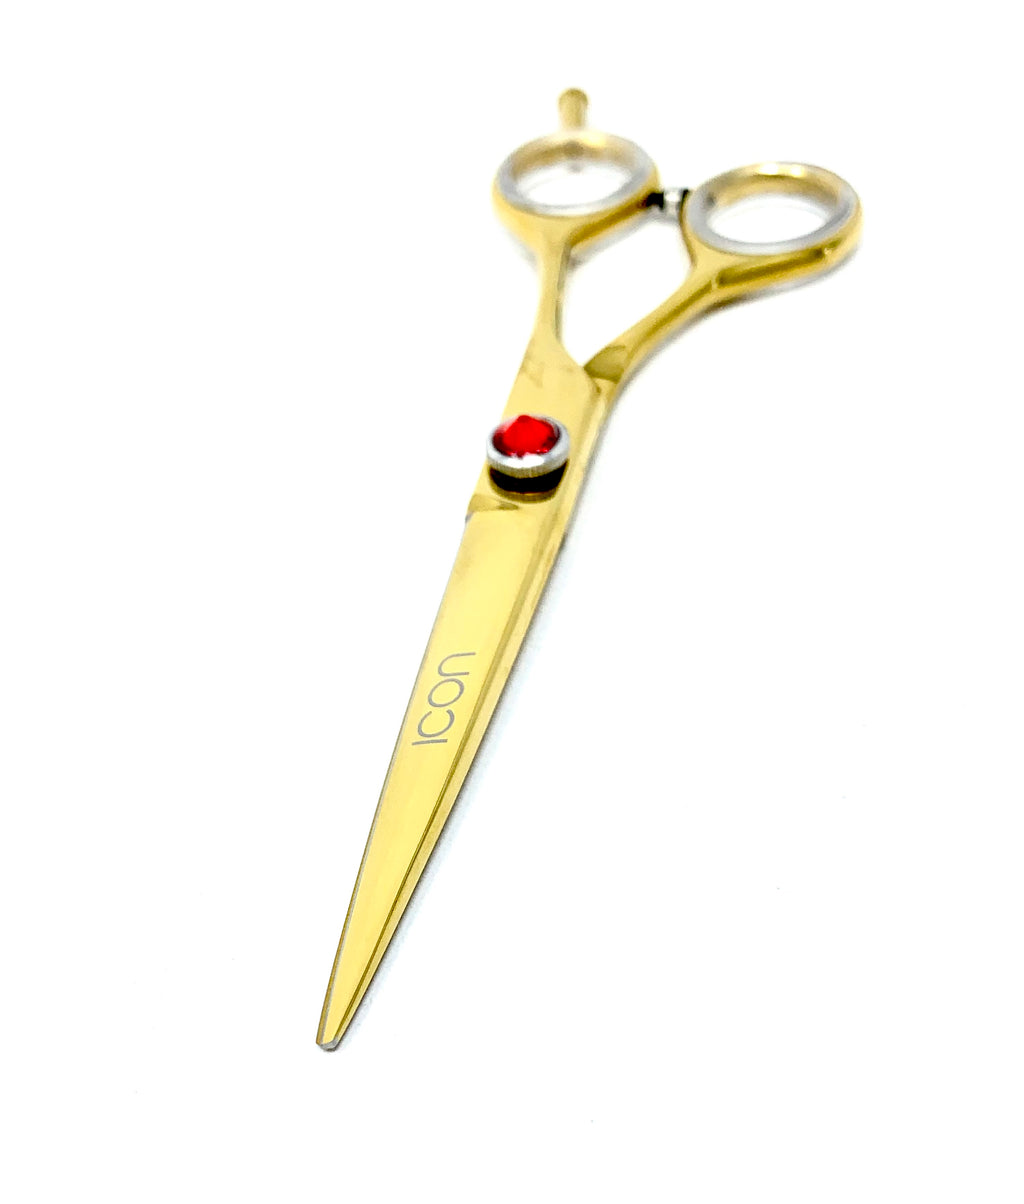 Professional Hair Cutting Scissors (Gold) - (ELITE AMG)